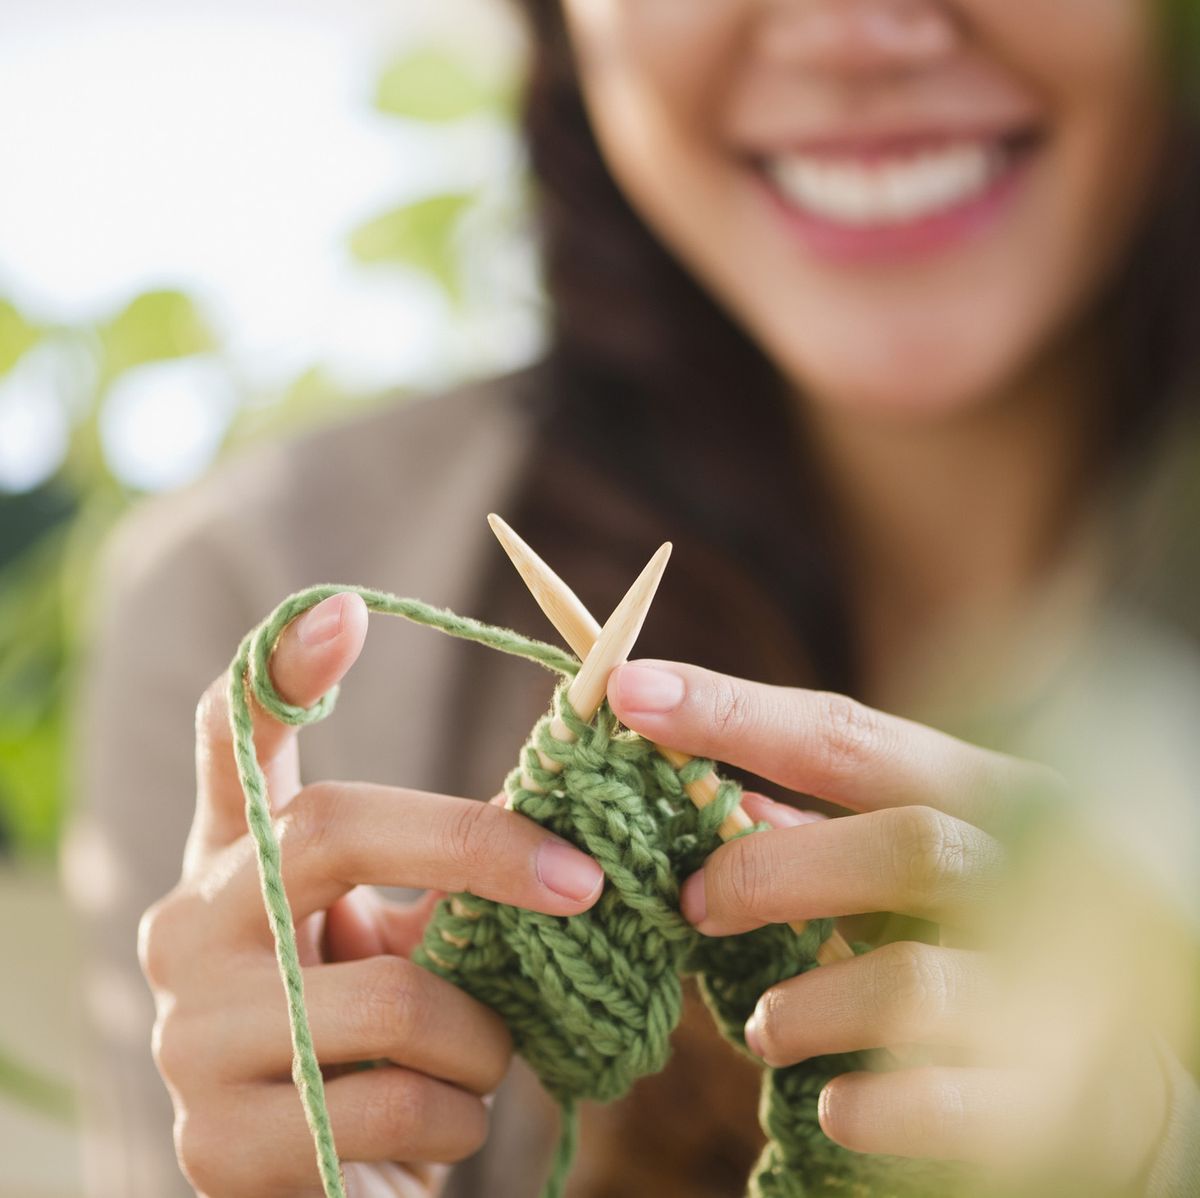 Knitting Books For Beginners: The Best How To Knitting Books